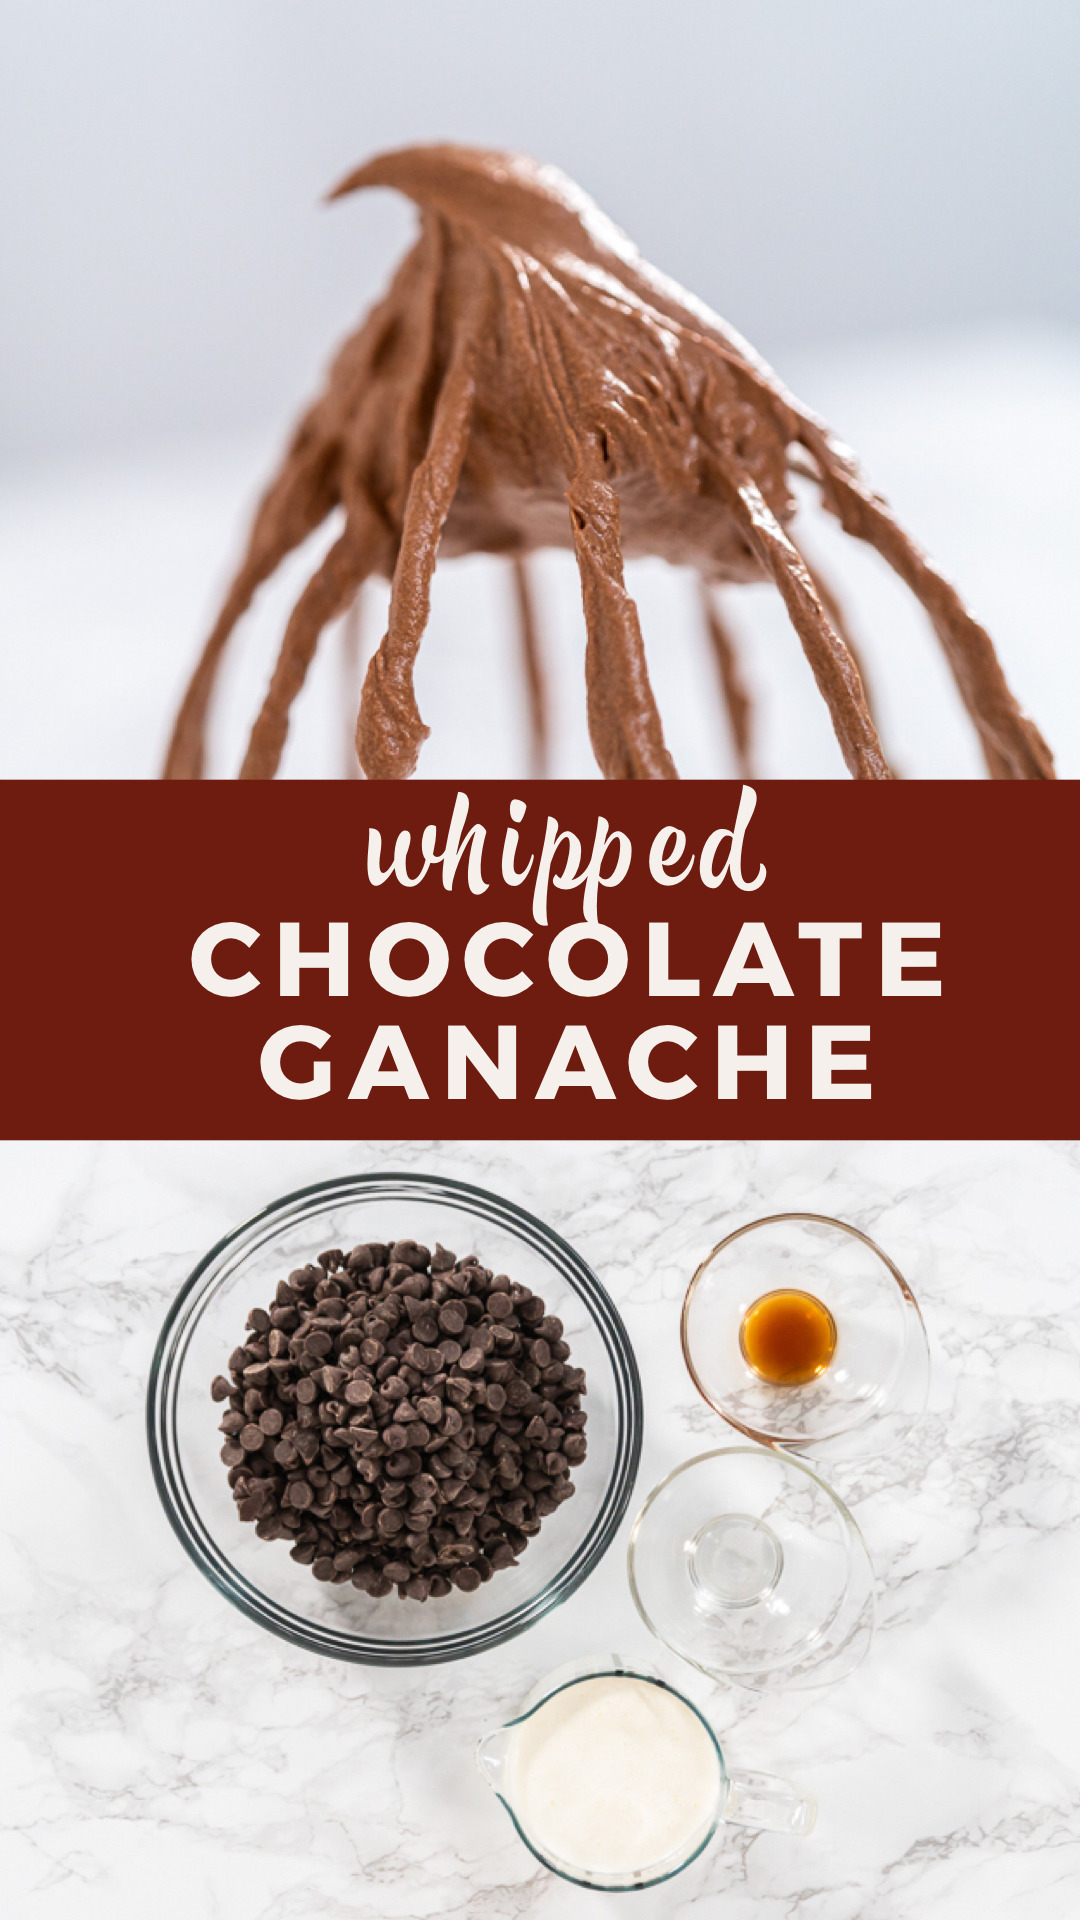 Chocolate ganache frosting